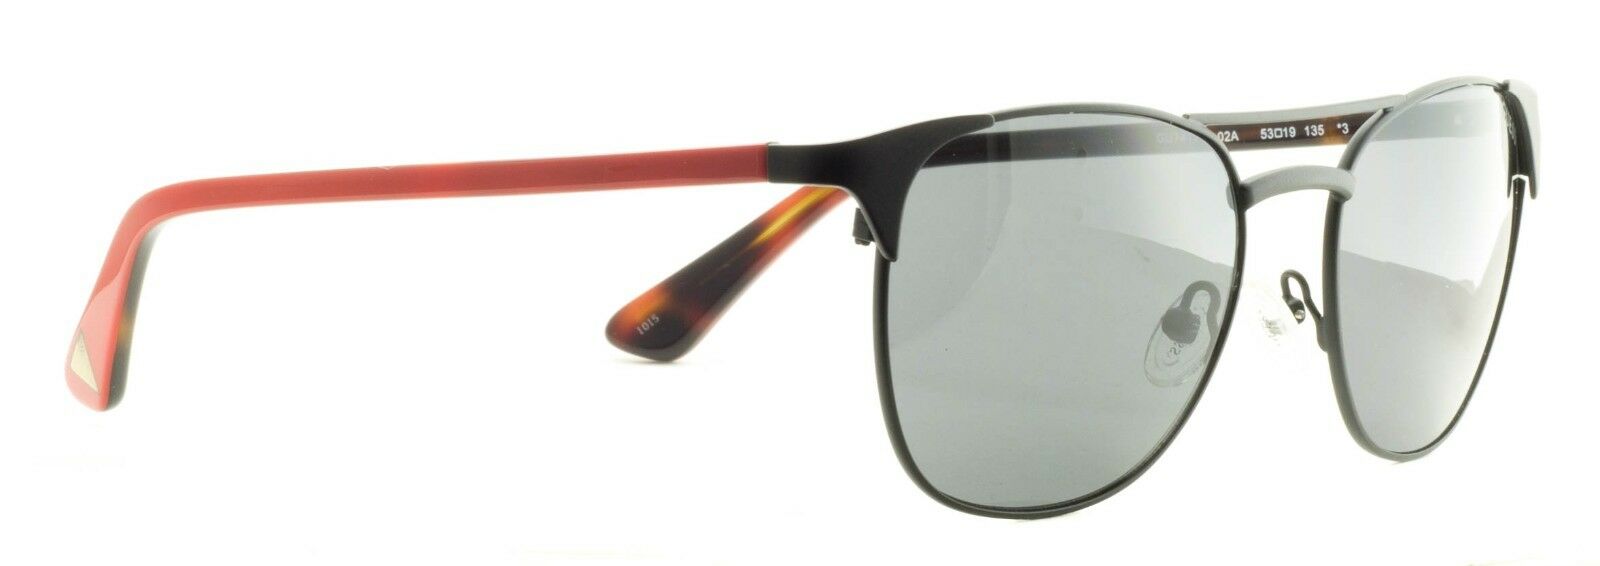 GUESS GU7413 02A Black Sunglasses Shades Fast Shipping BNIB - Brand New in Case